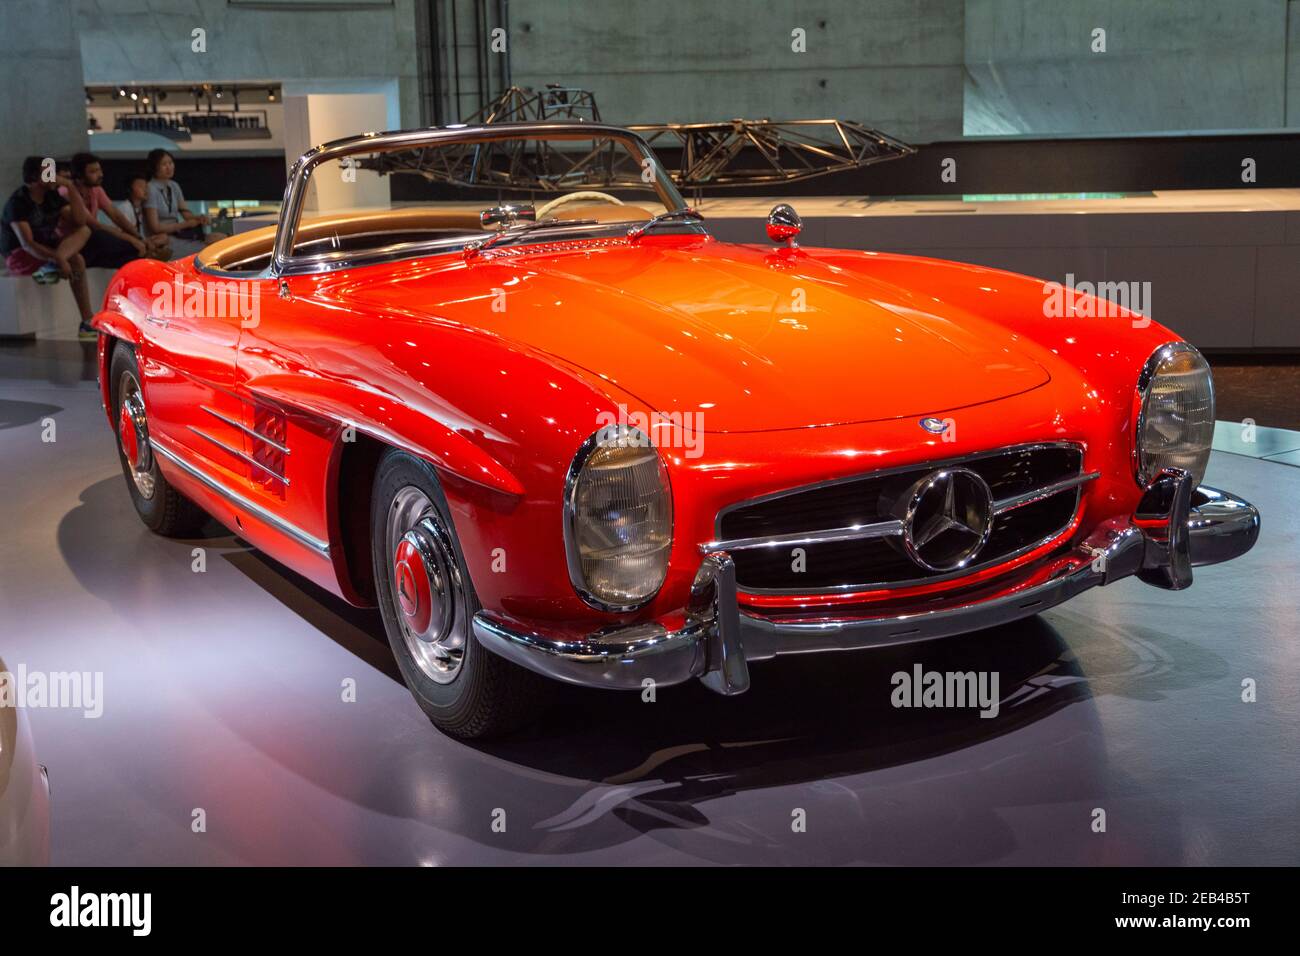 Mercedes-Benz Museum added a new photo. - Mercedes-Benz Museum